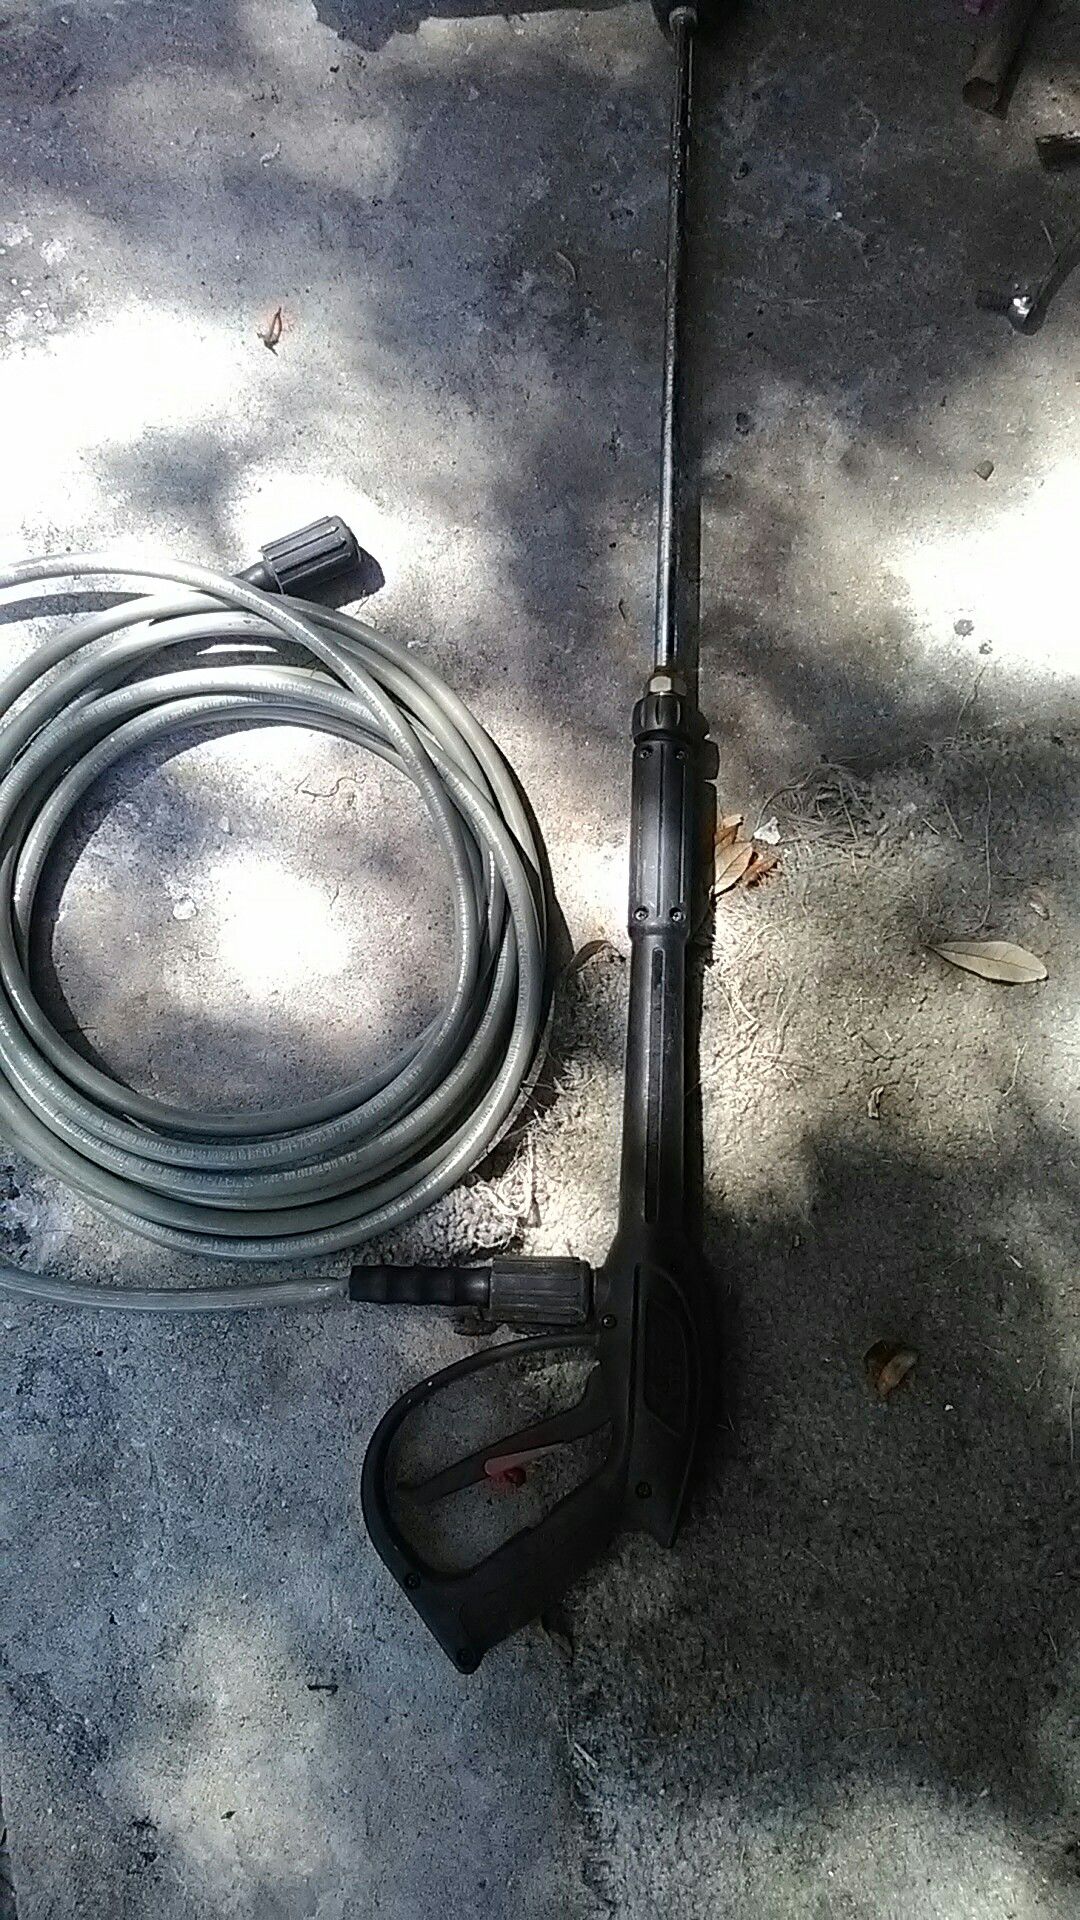 Pressure washer sprayer and hose like new